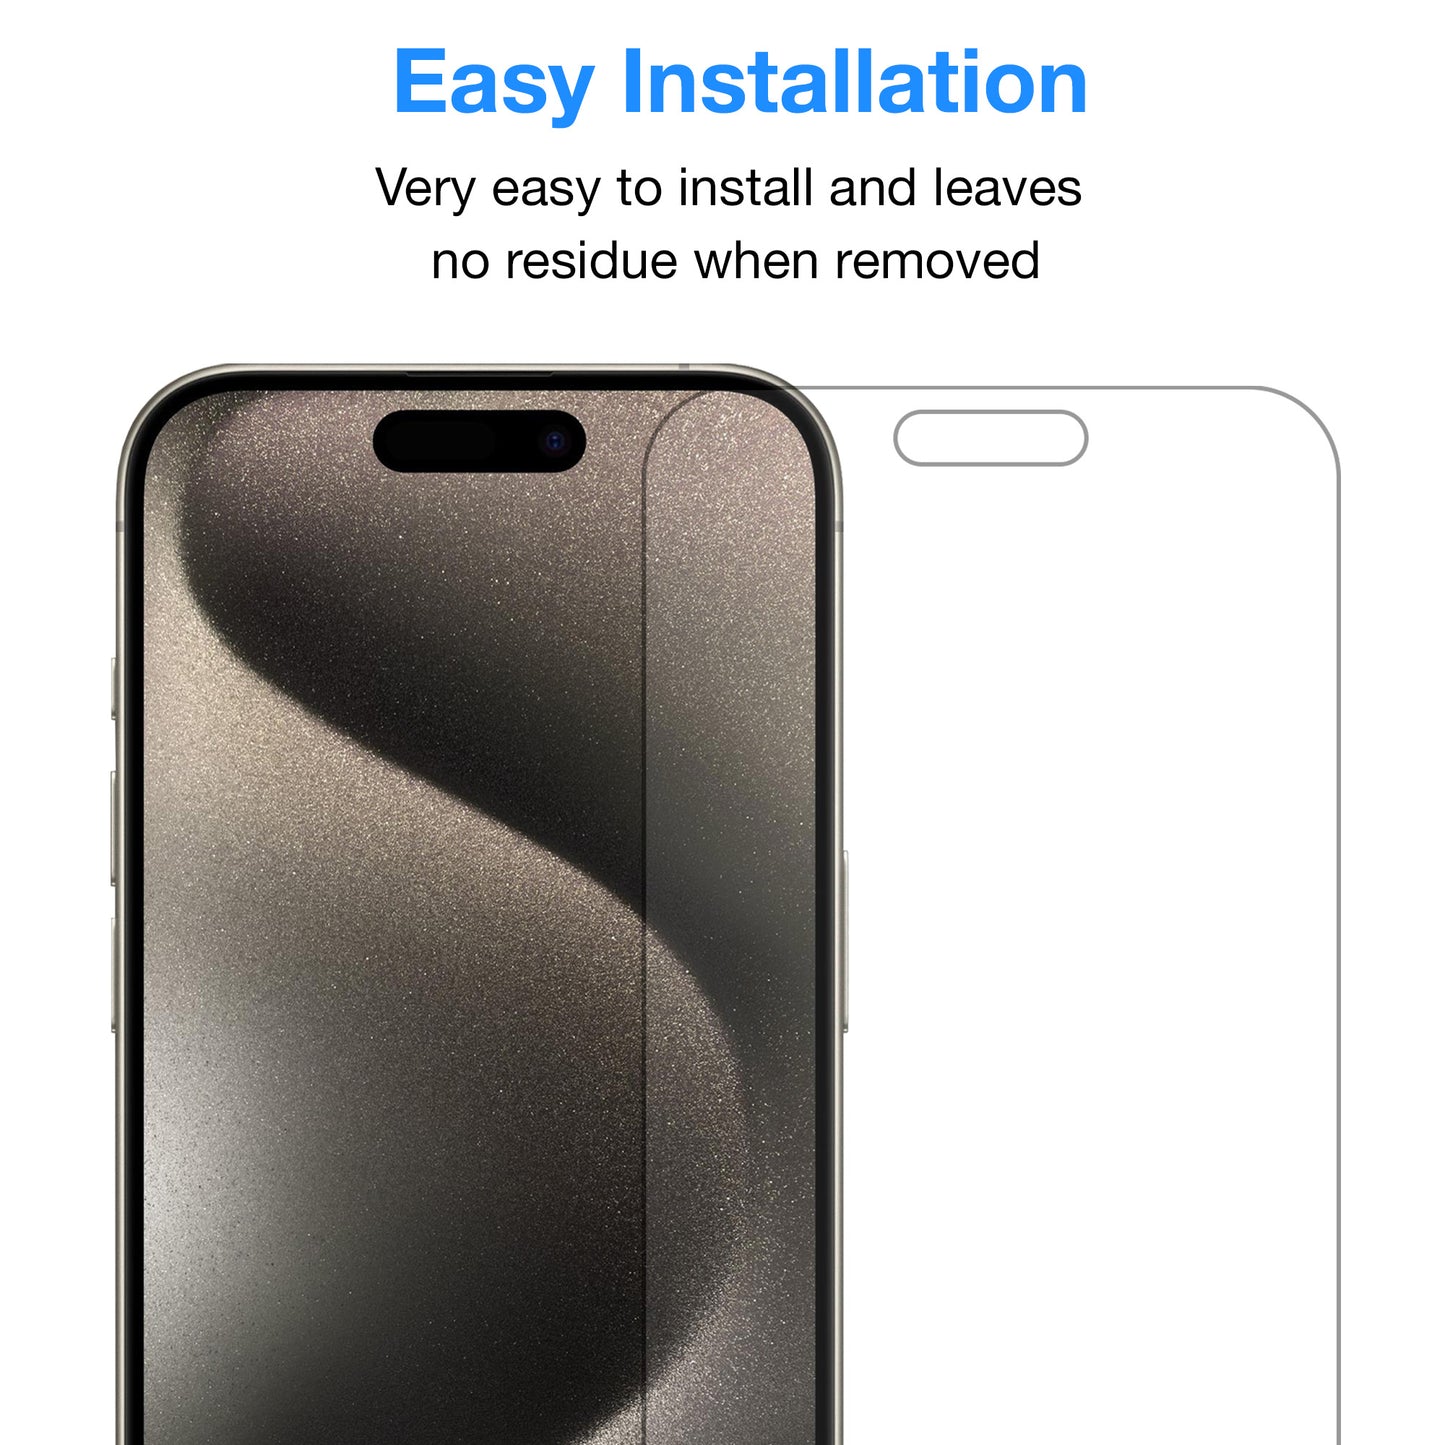 [3 Pack] MEZON Anti-Glare Matte Film for iPhone 15 Pro Max (6.7") Premium Case Friendly Screen Protector